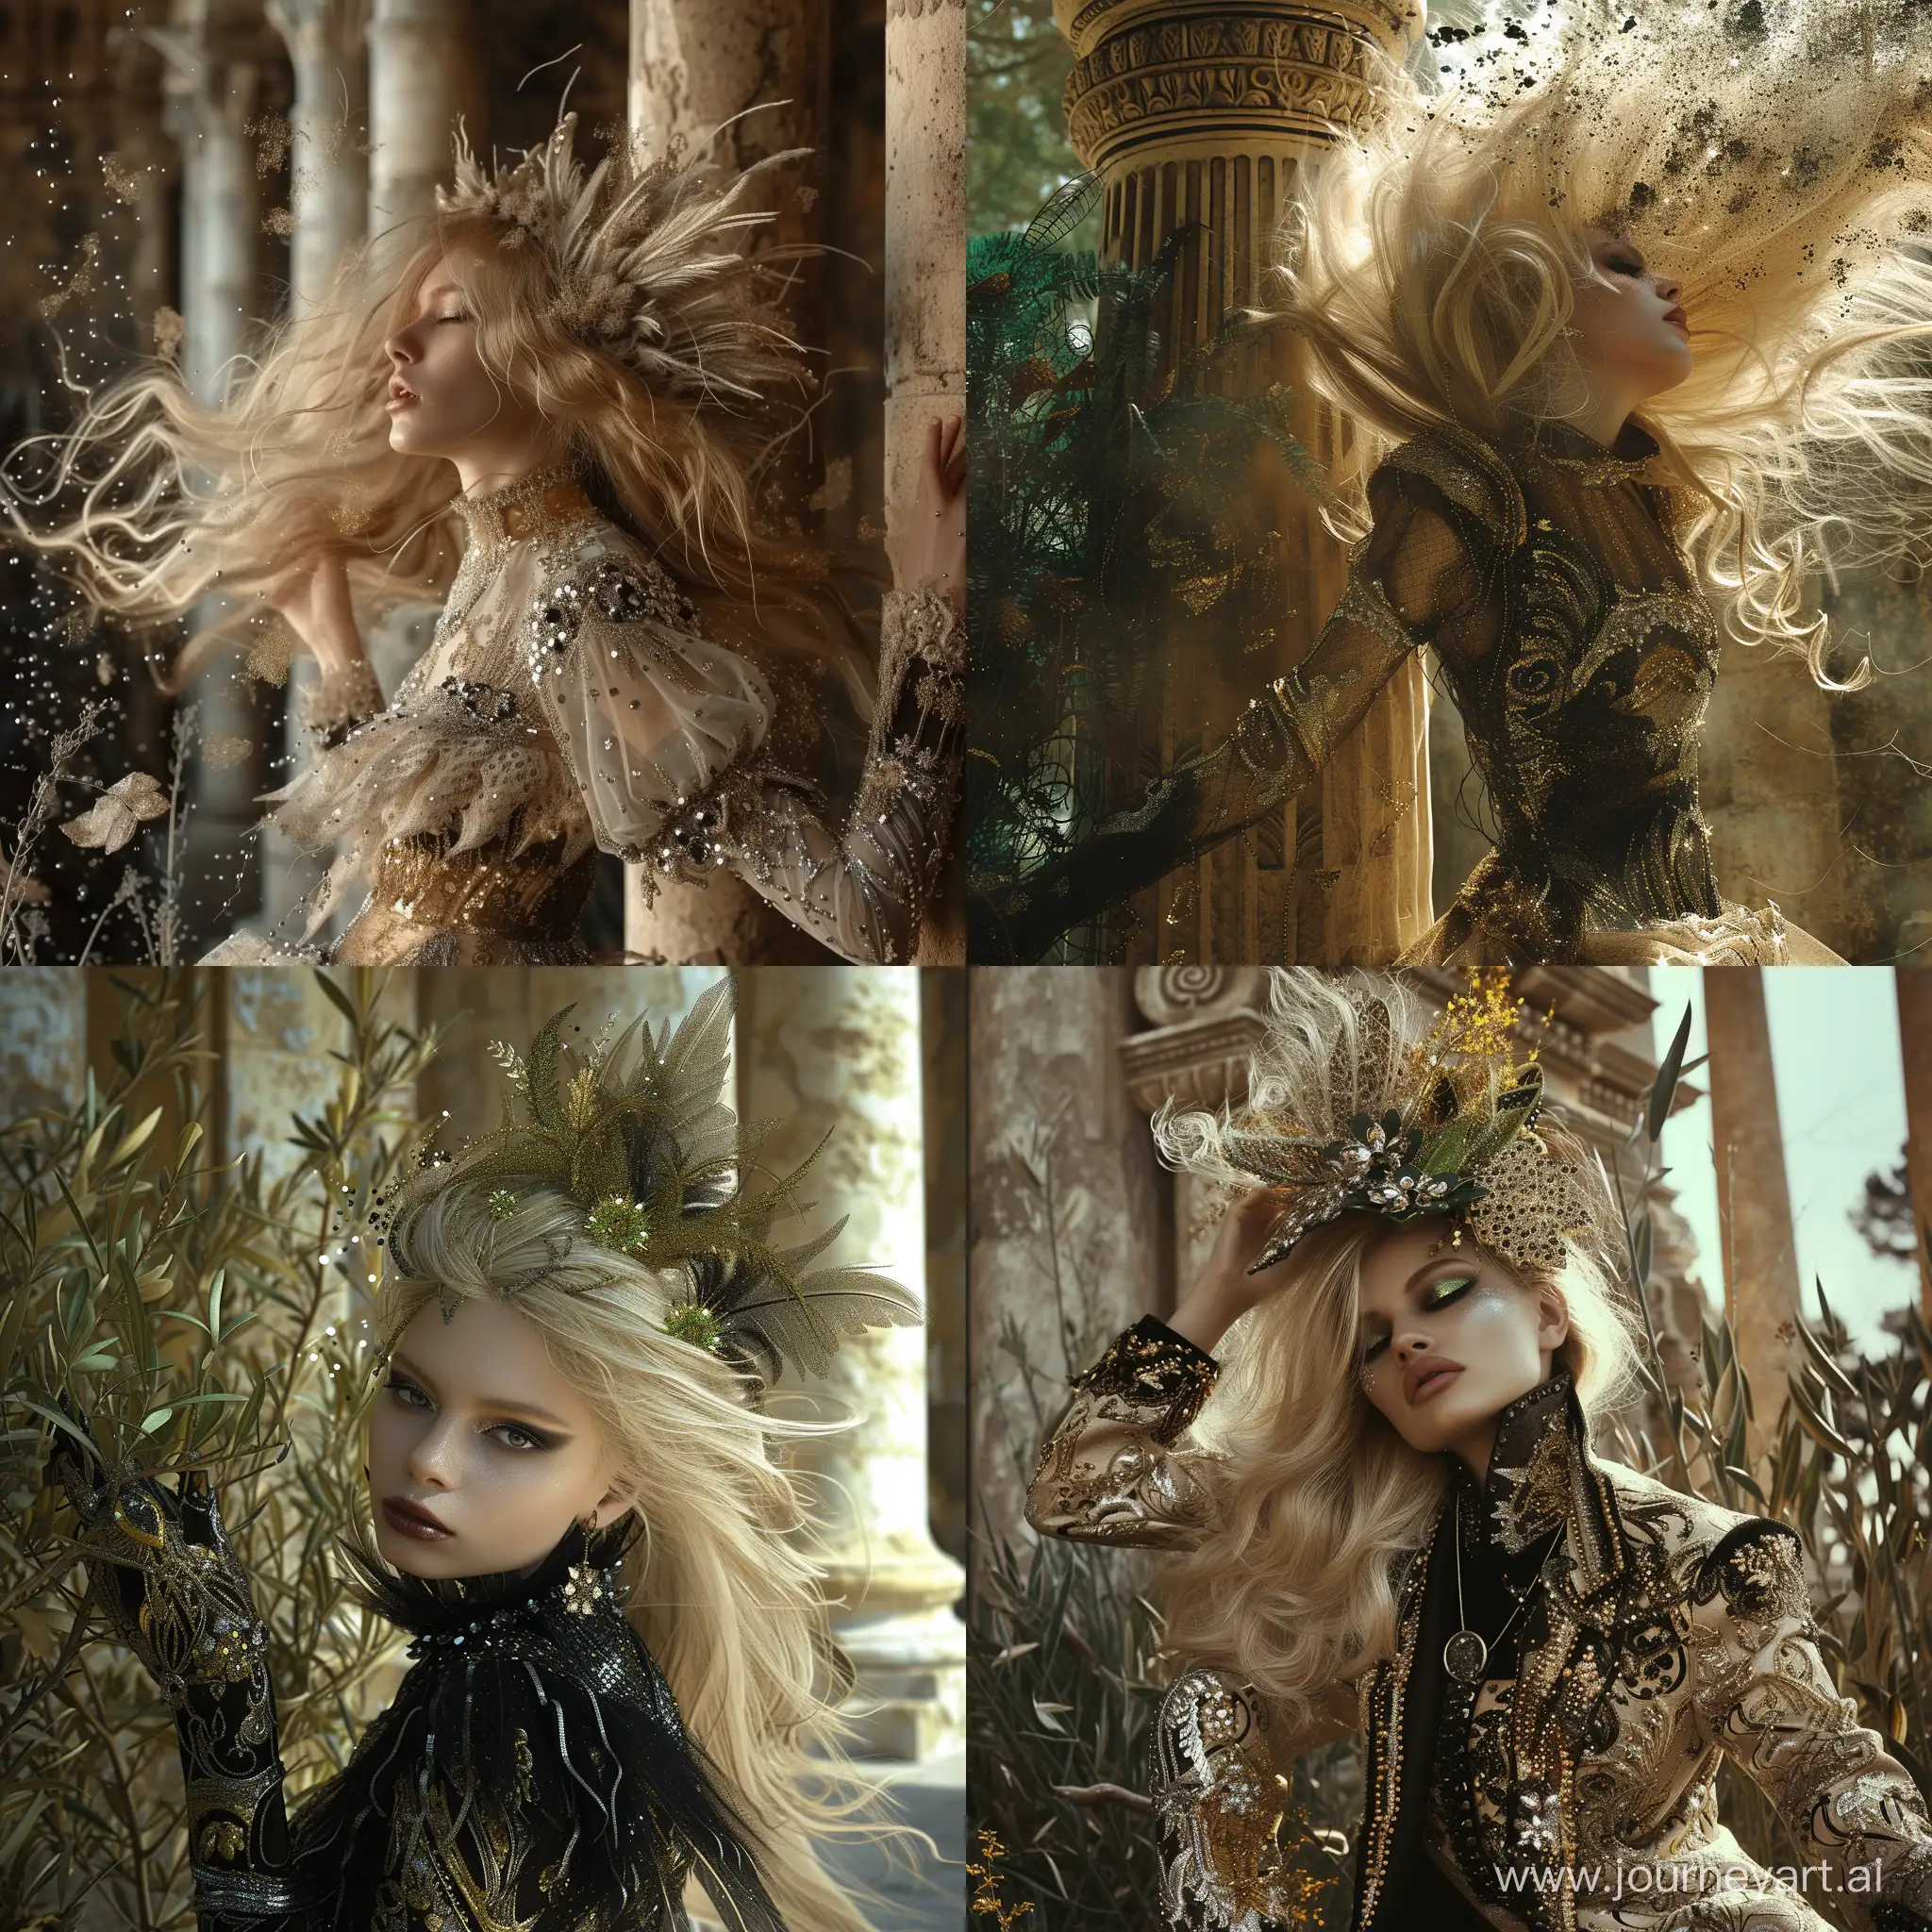 Enchanting-High-Fashion-Blonde-Prima-Strikes-Dynamic-Pose-Among-Exotic-Plants-and-Ancient-Columns